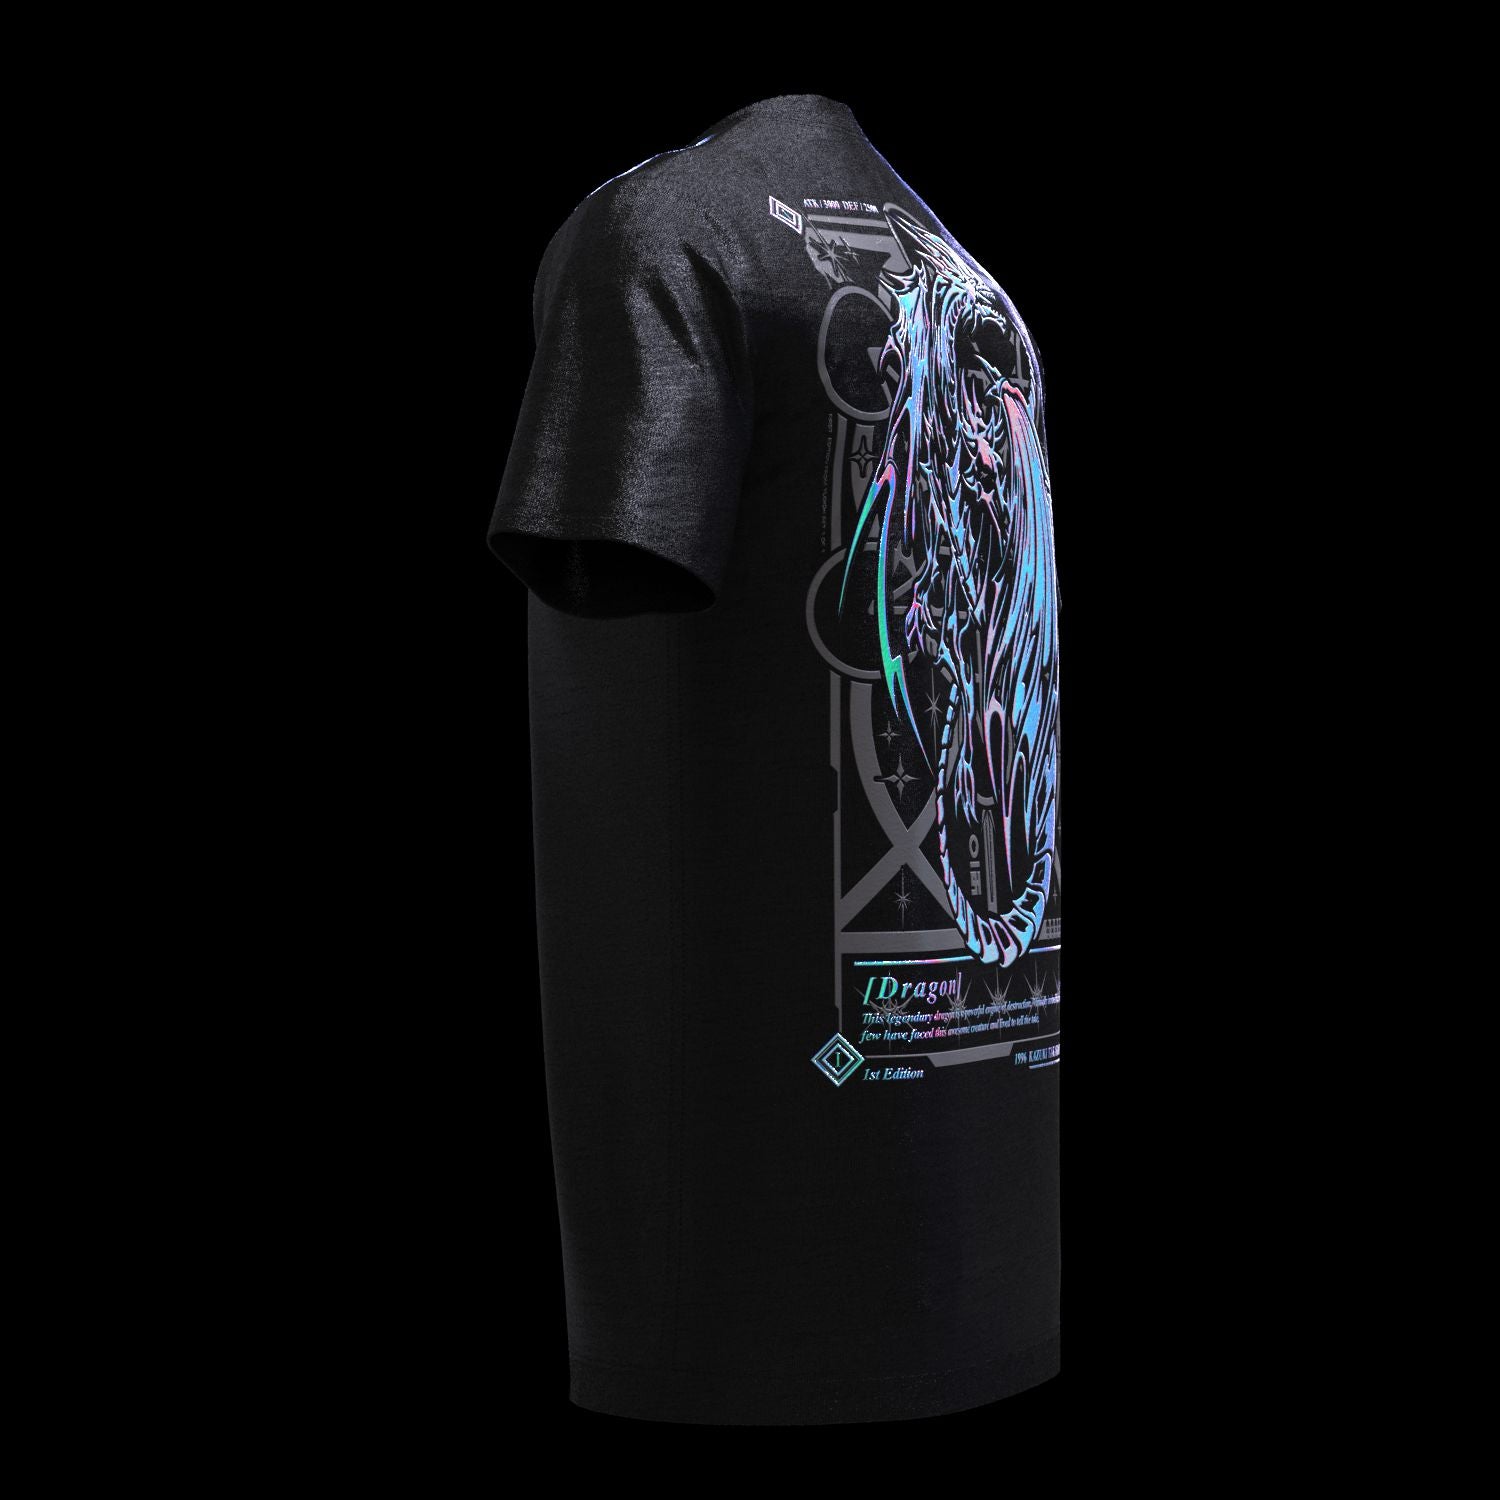 Neo4ic FF7 Holographic Streetwear Shirt